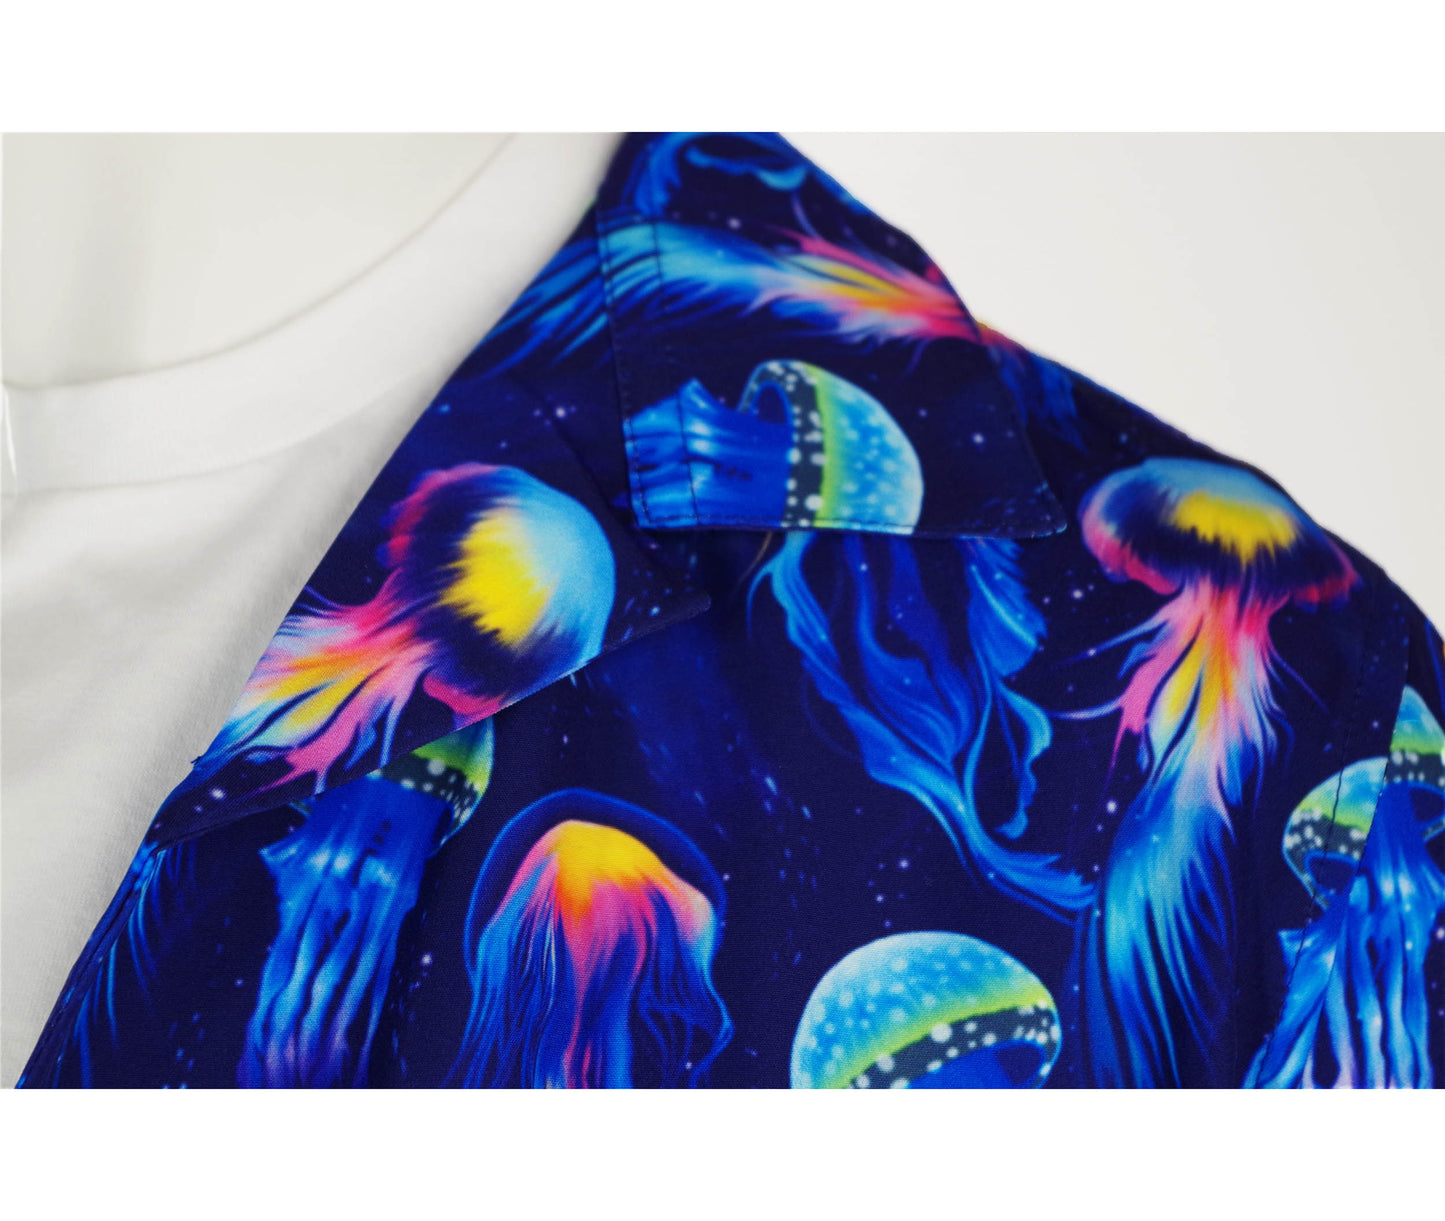 Jellyfish Festival Button Up Shirt